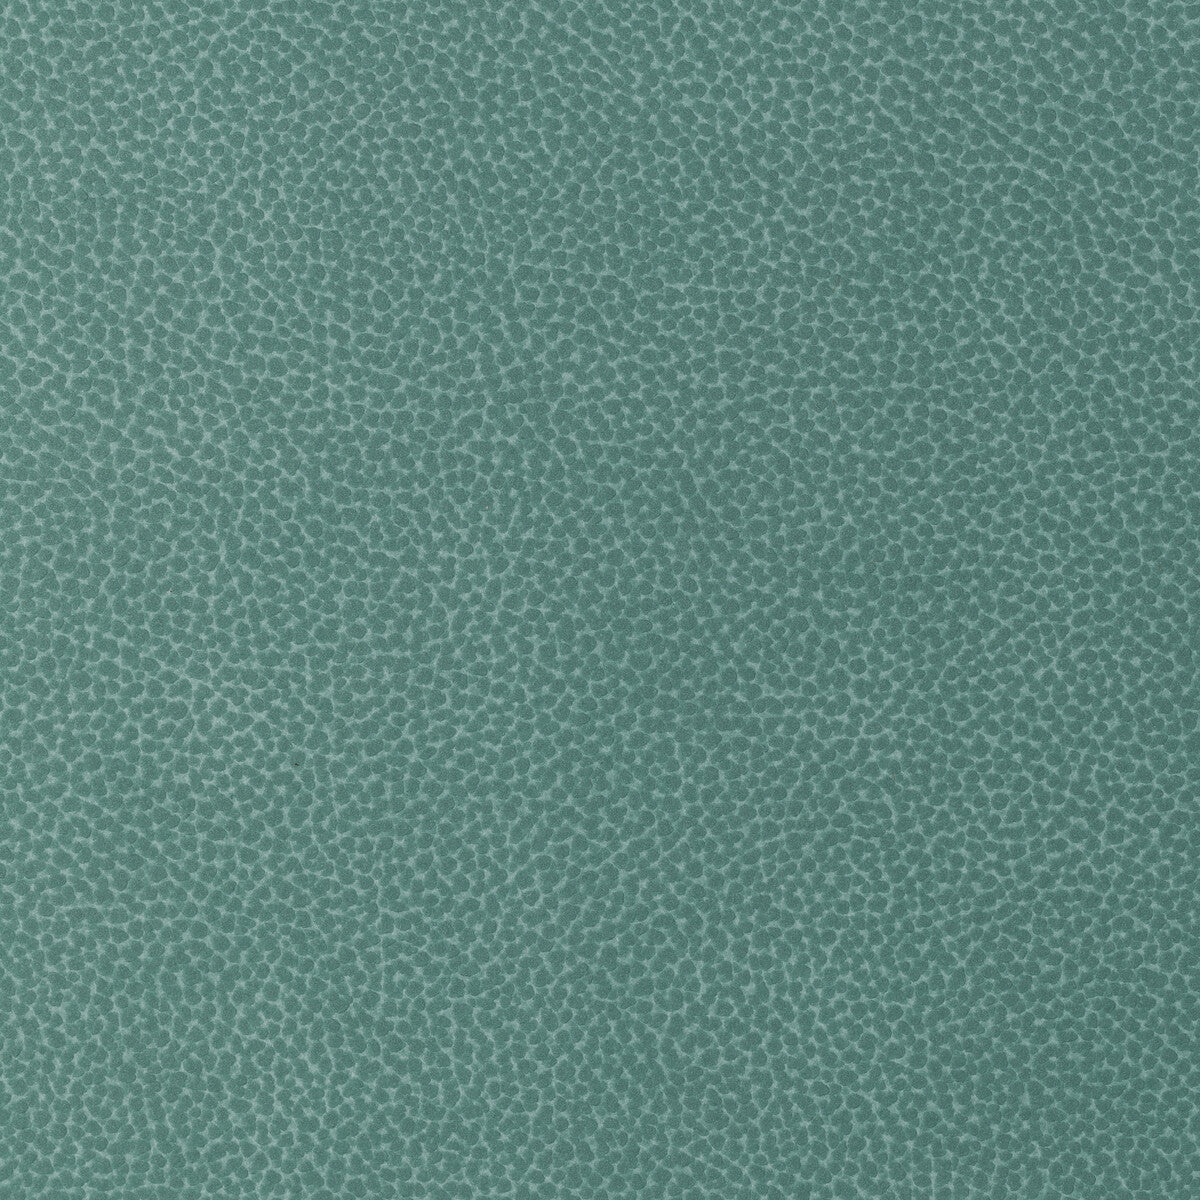 Kravet Design fabric in sweetgum-313 color - pattern SWEETGUM.313.0 - by Kravet Design